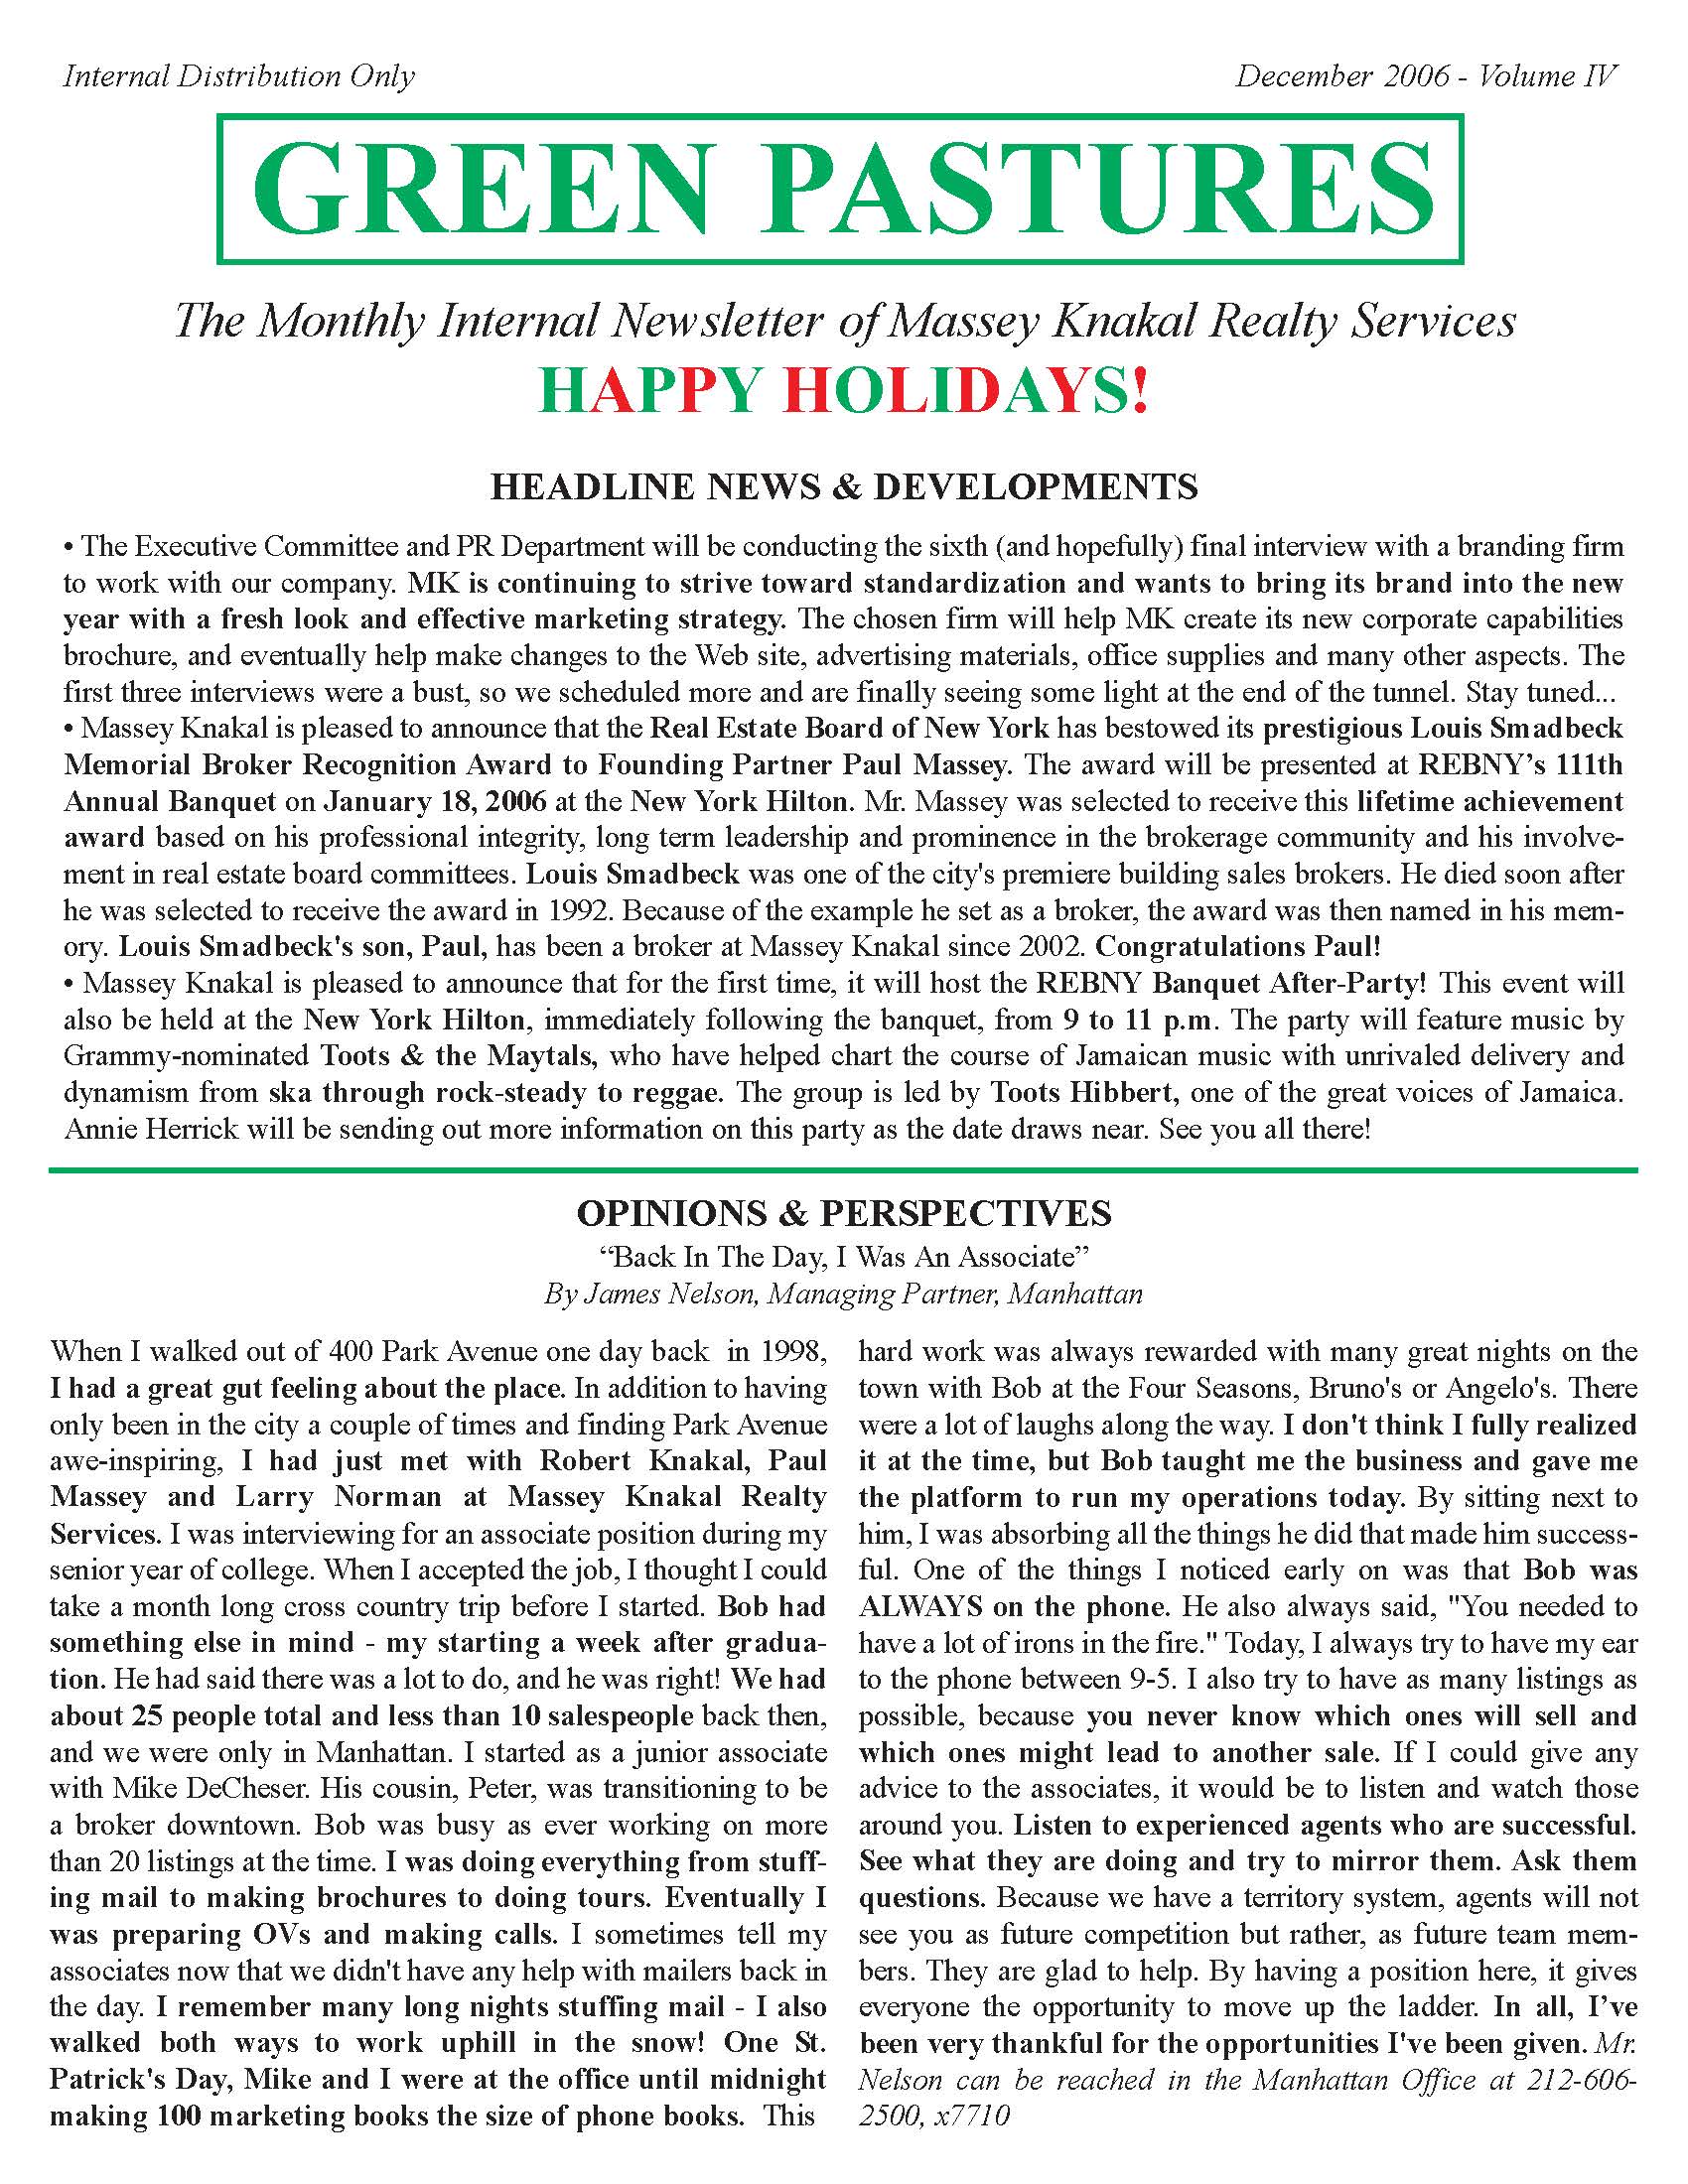 December 2006 Internal Newsletter_Page_1